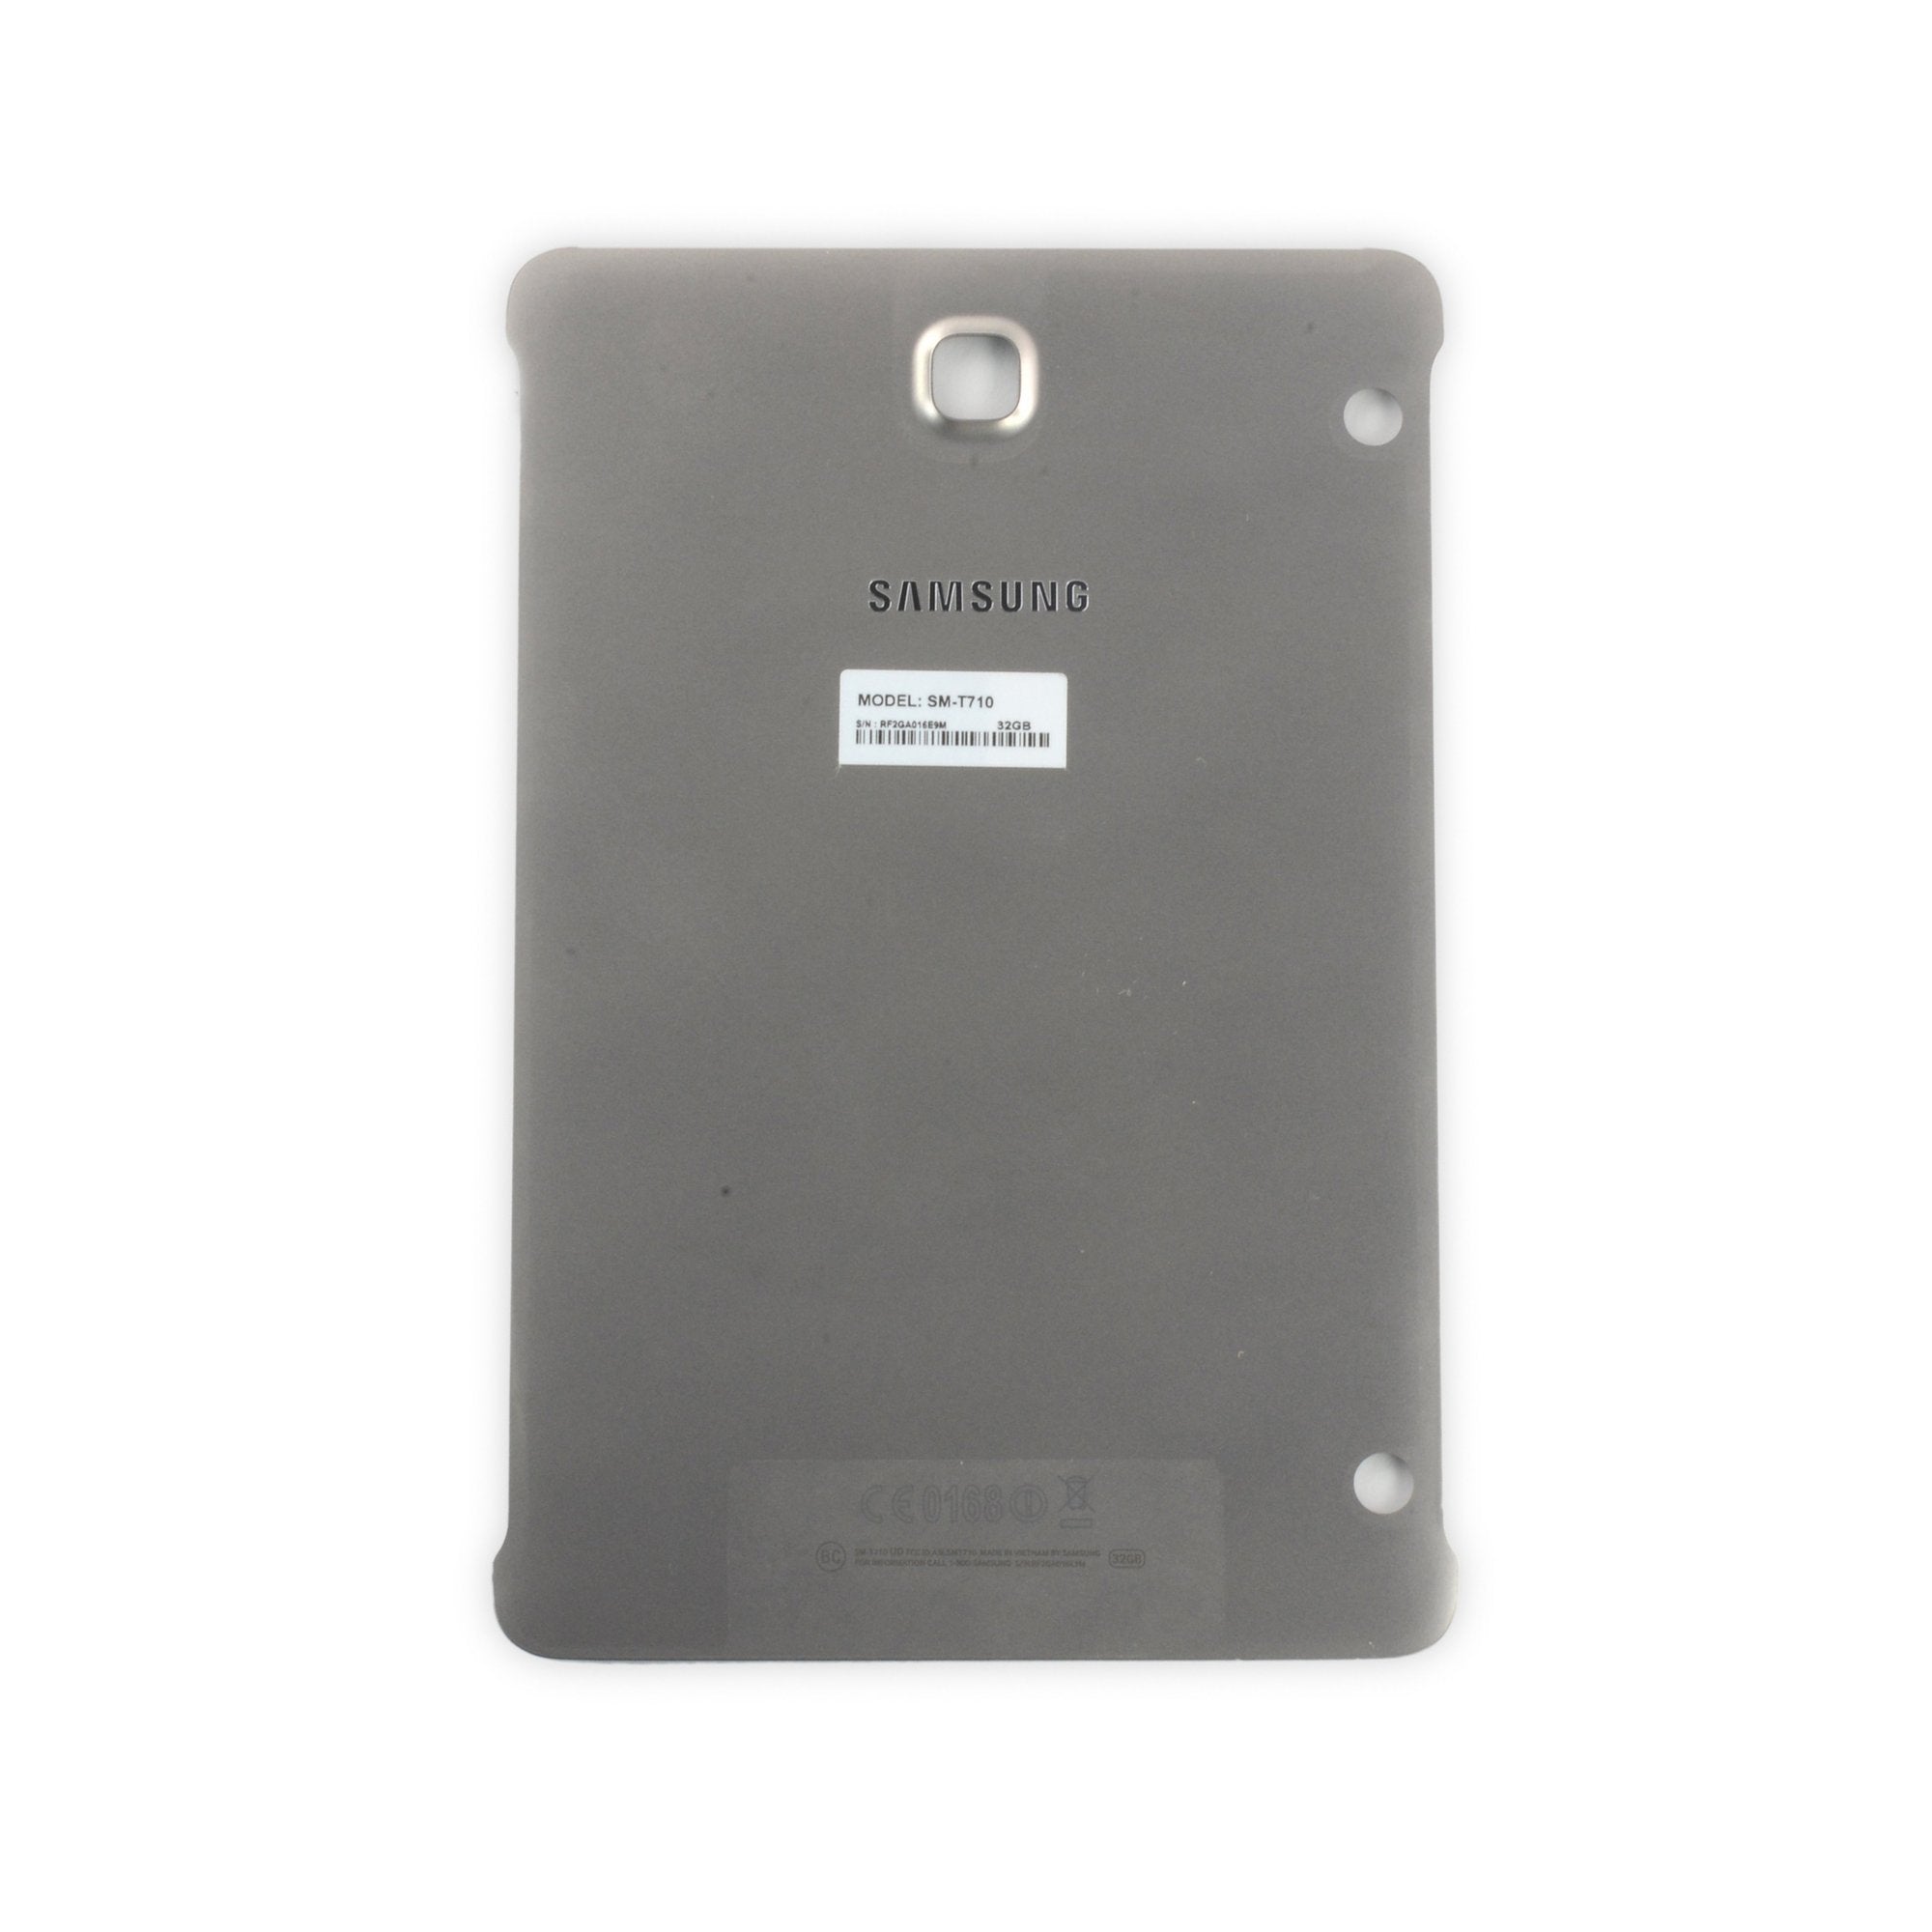 Galaxy Tab S2 8.0 (Wi-Fi) Rear Panel Gold Used, A-Stock